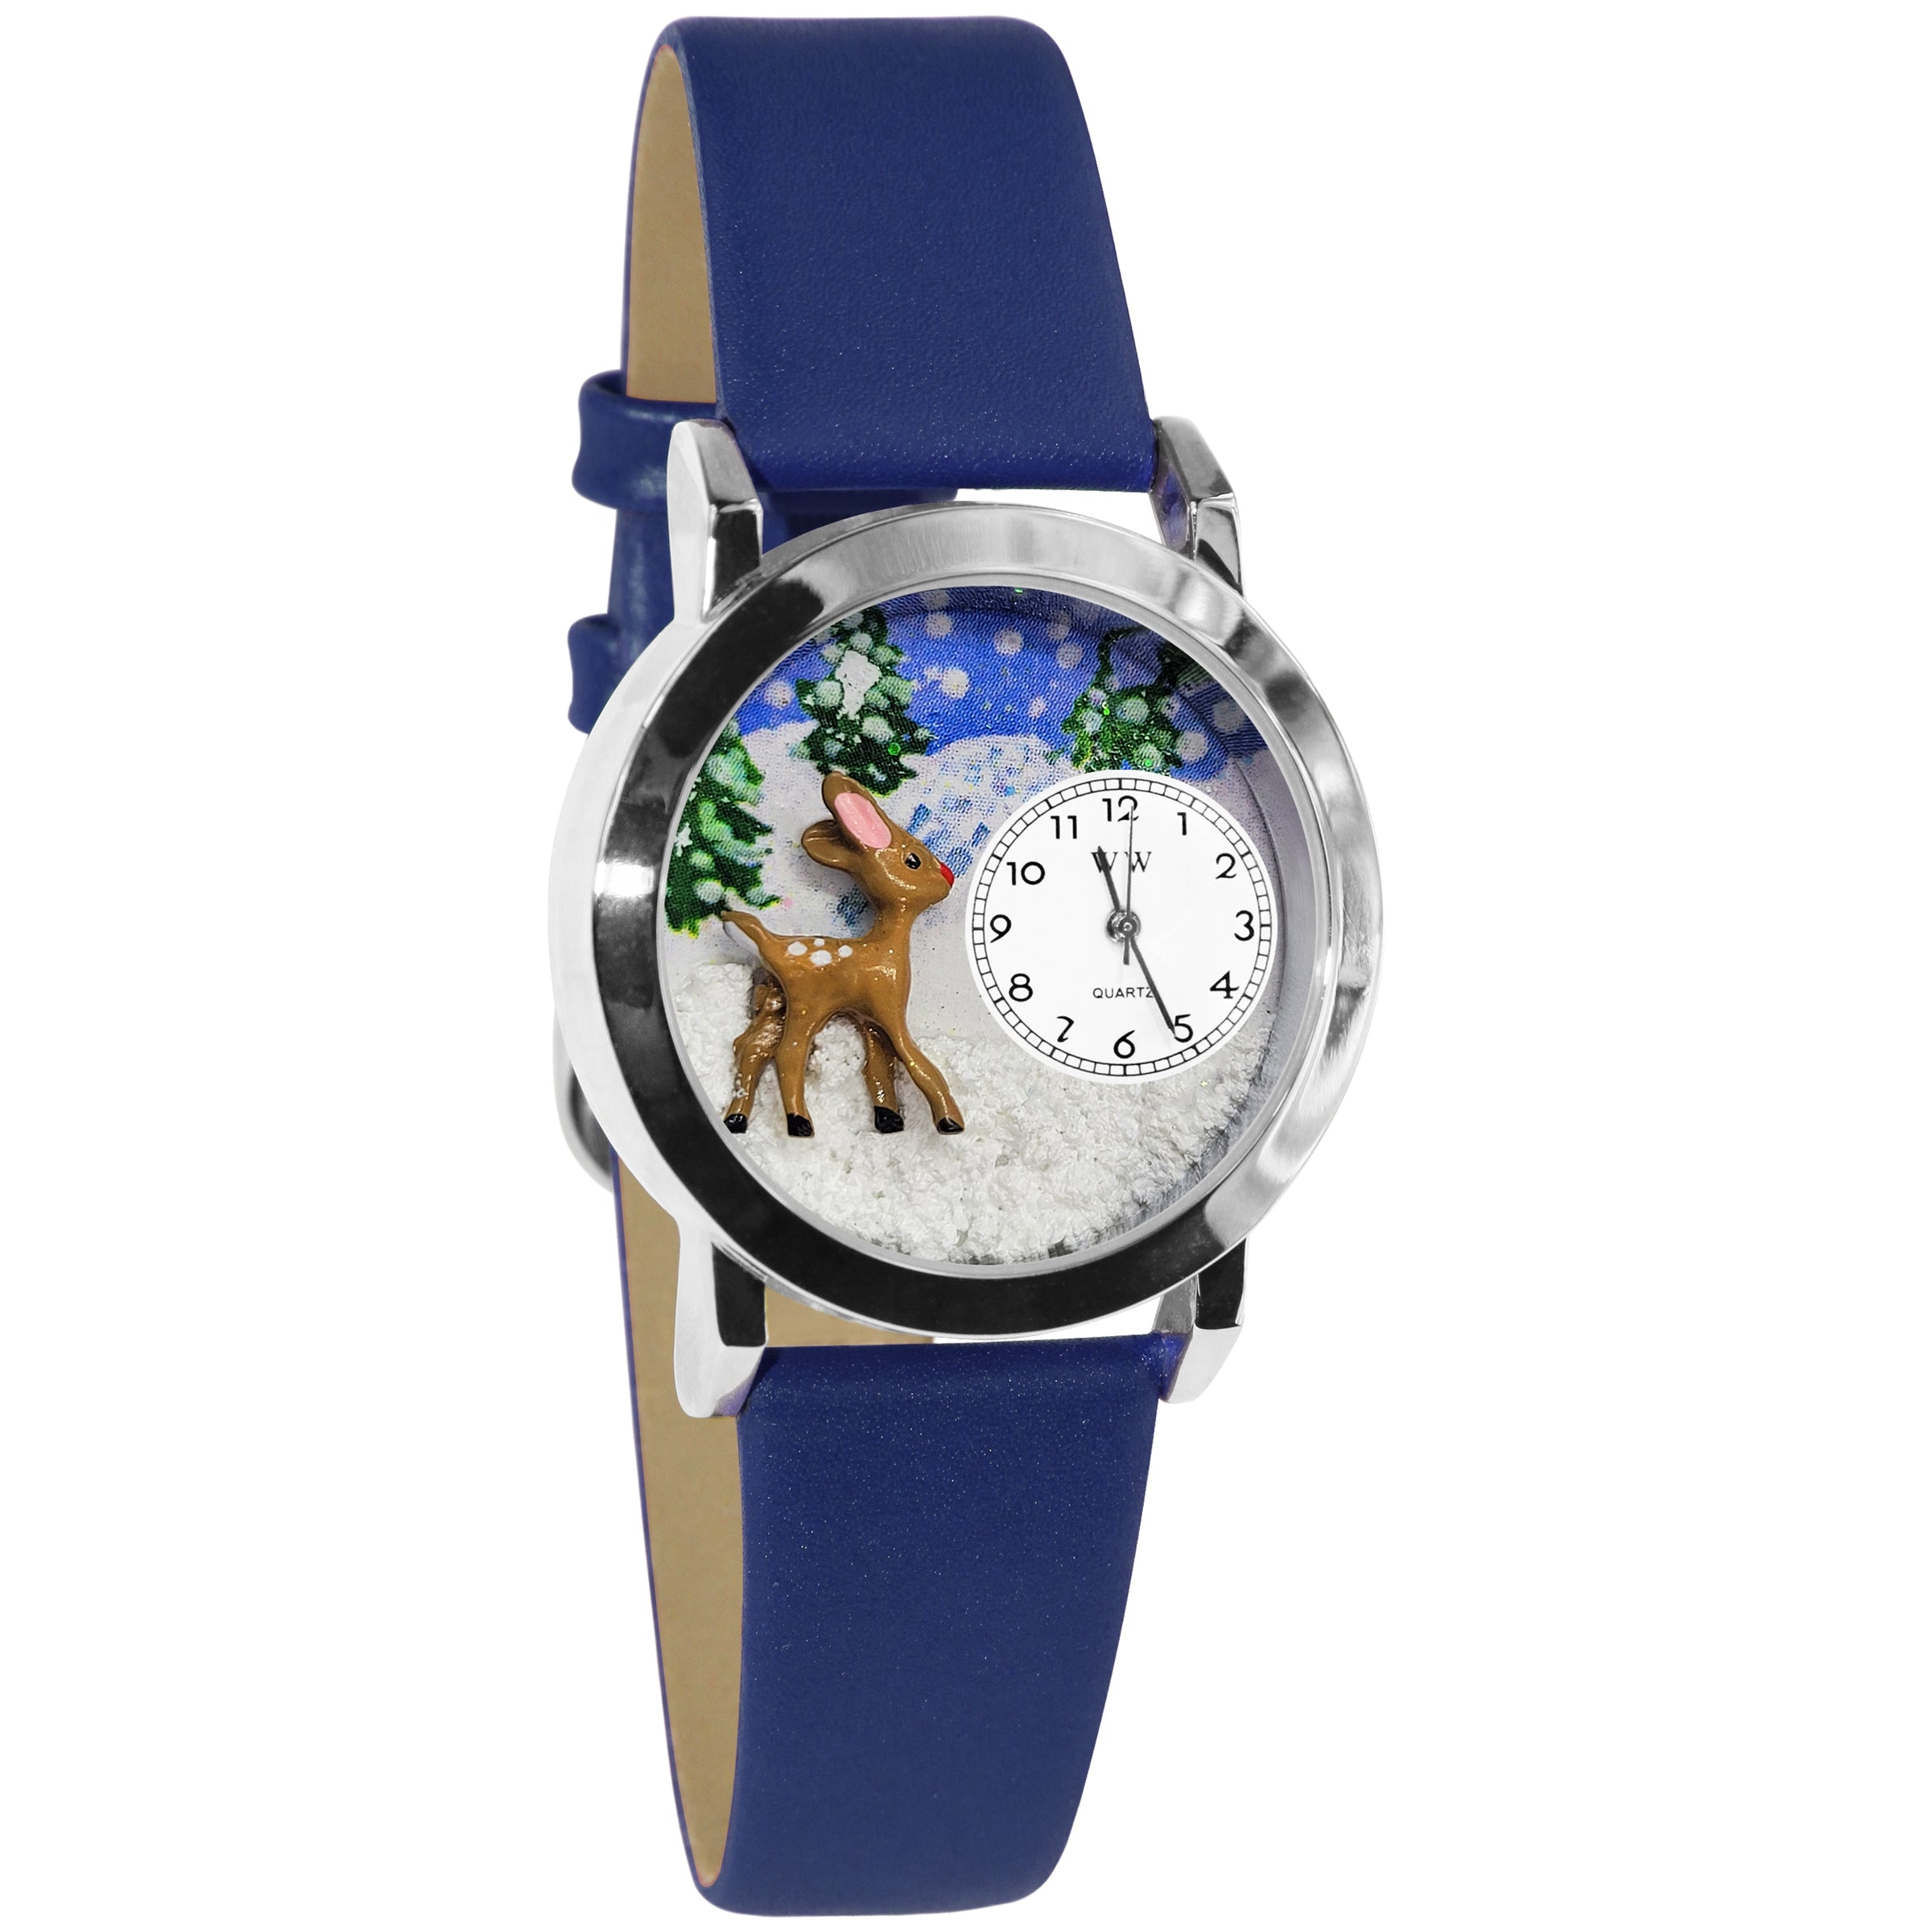 Accessories | Reindeer Holiday Watch | Poshmark